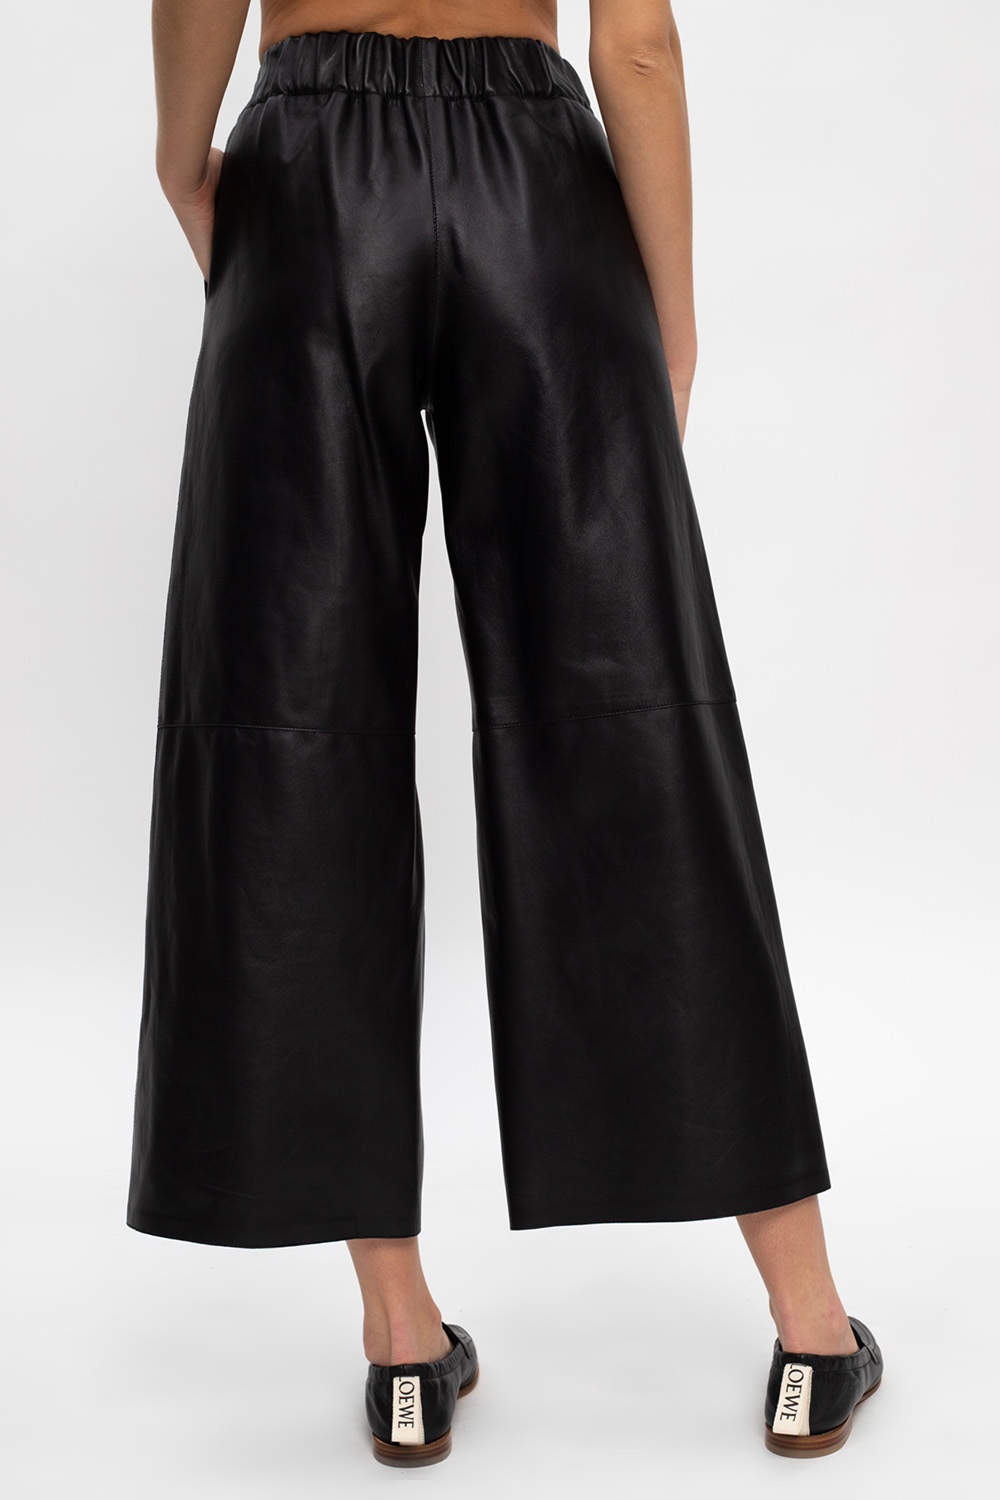 Loewe Wide-legged leather Side trousers